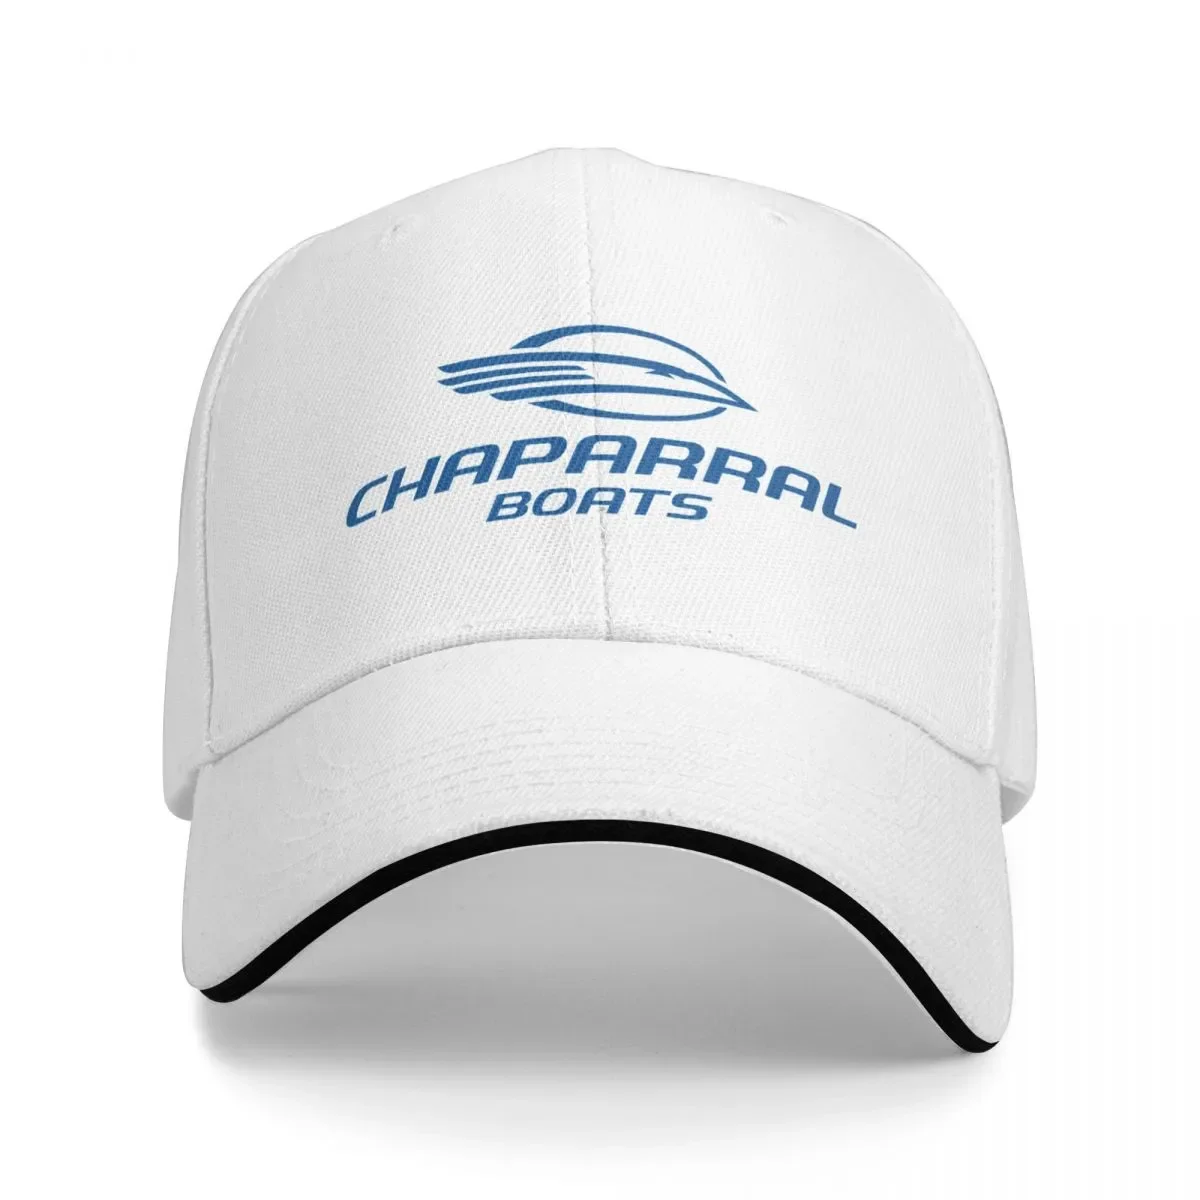 

New Chaparral Boats Pocket Cap Baseball Cap Cap hat new in hat kids hat men's hats Women's